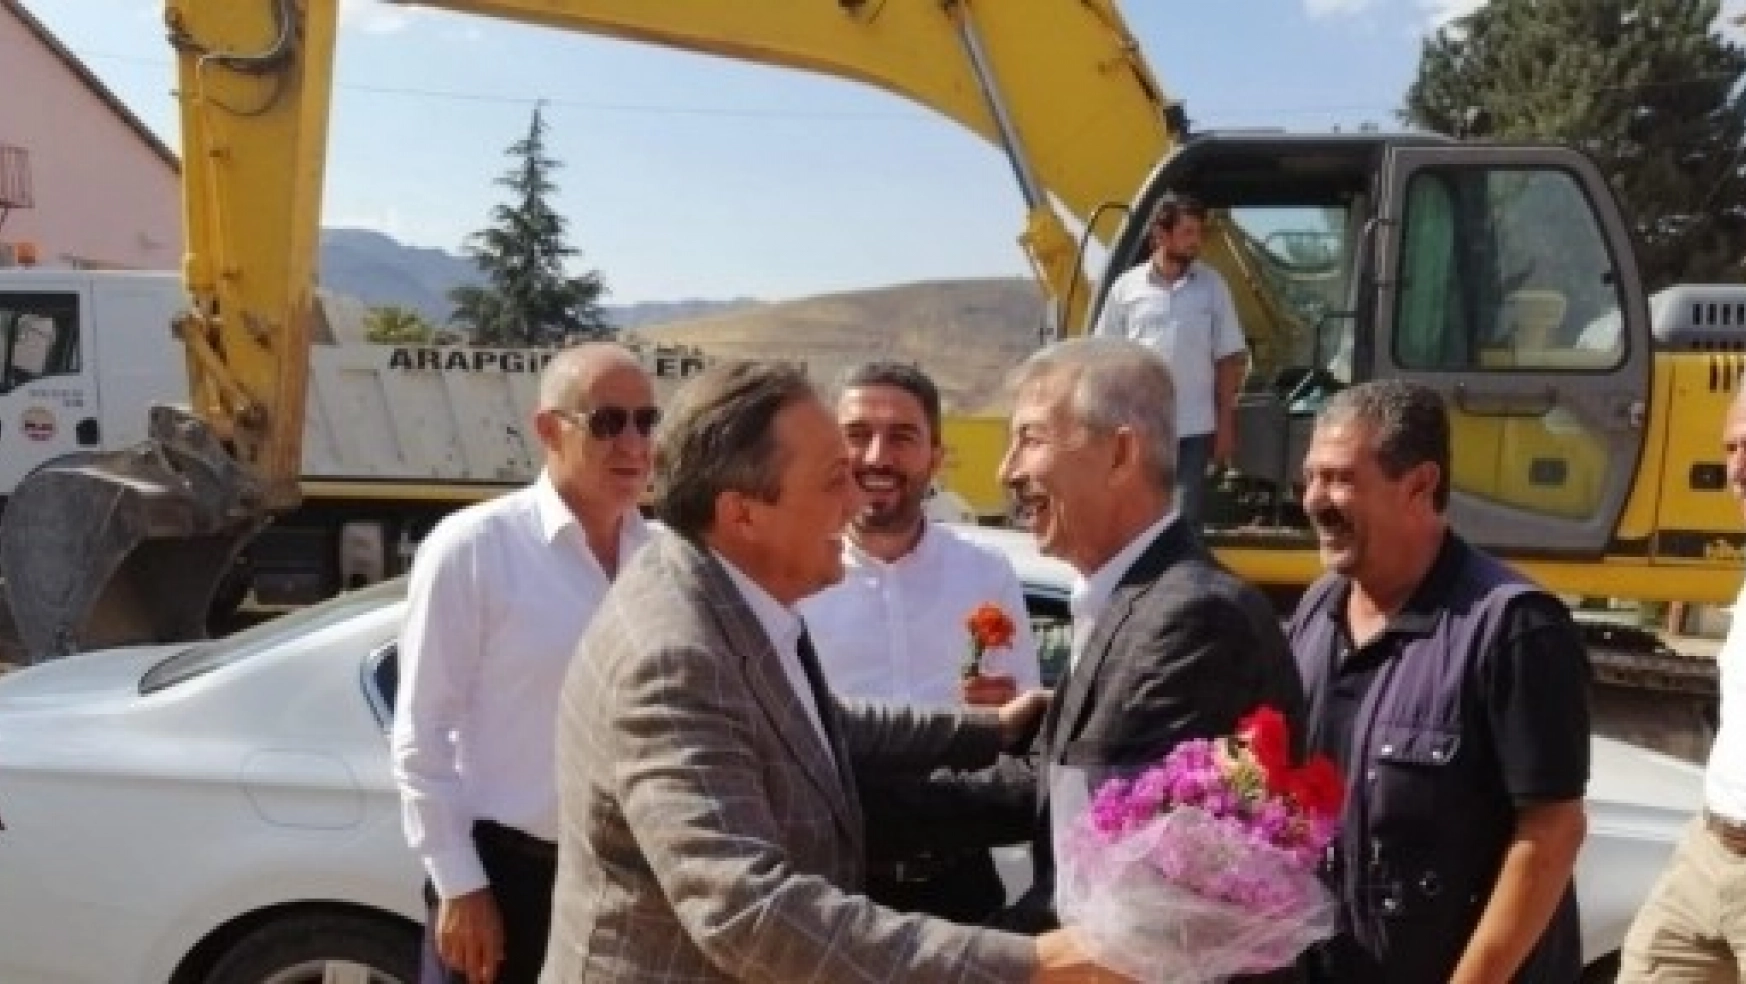 CHP Heyetinden Arapgir Ziyareti